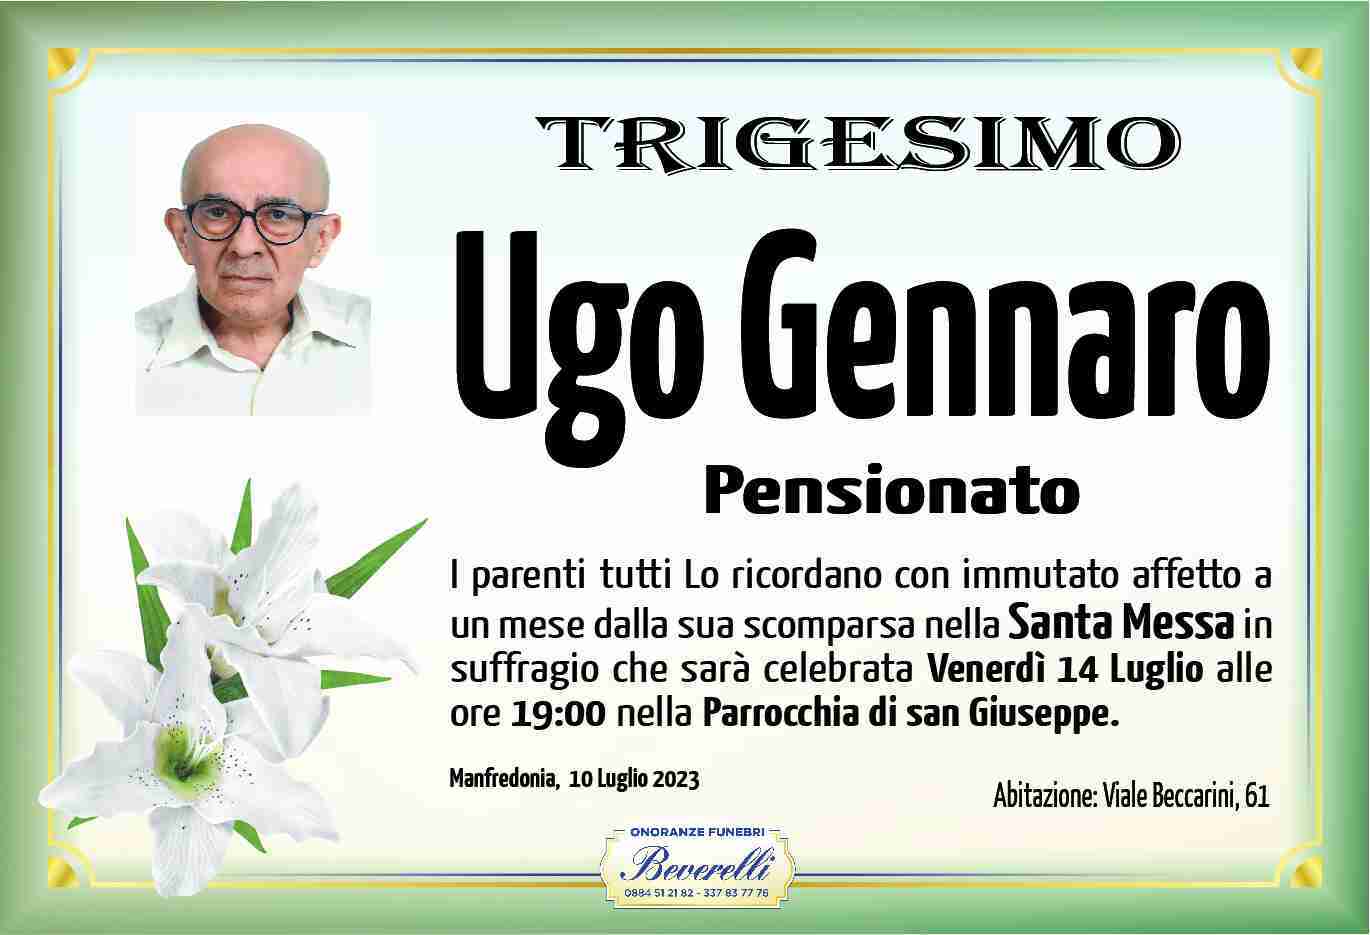 Ugo Gennaro